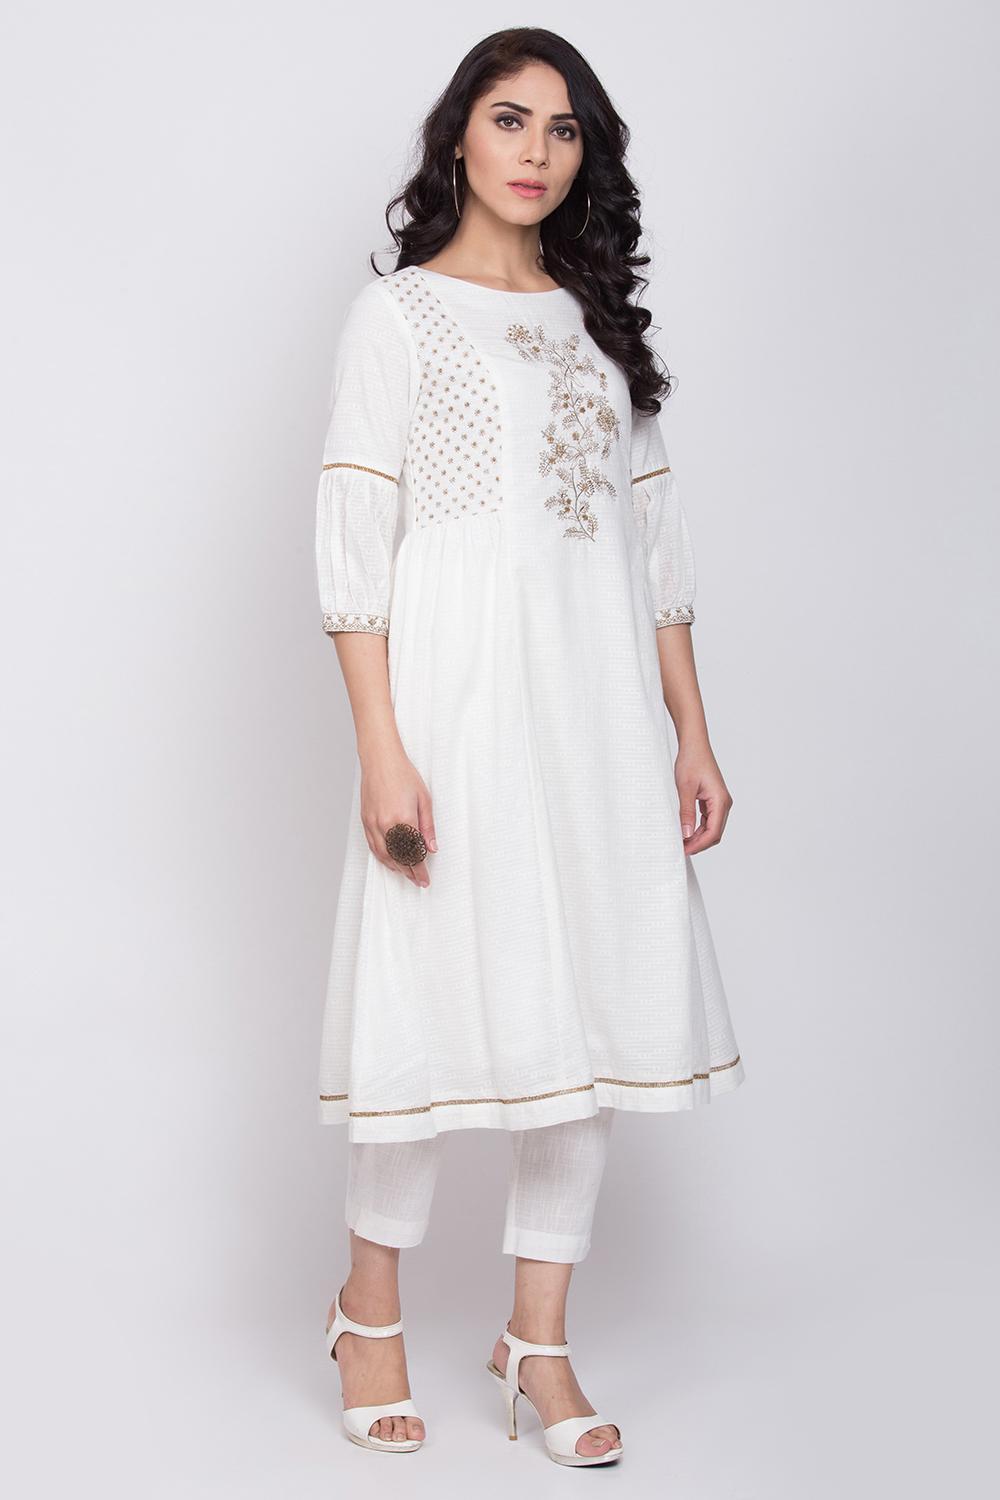 Buy Online Off White Cotton A Line Kurta for Women & Girls at Best ...